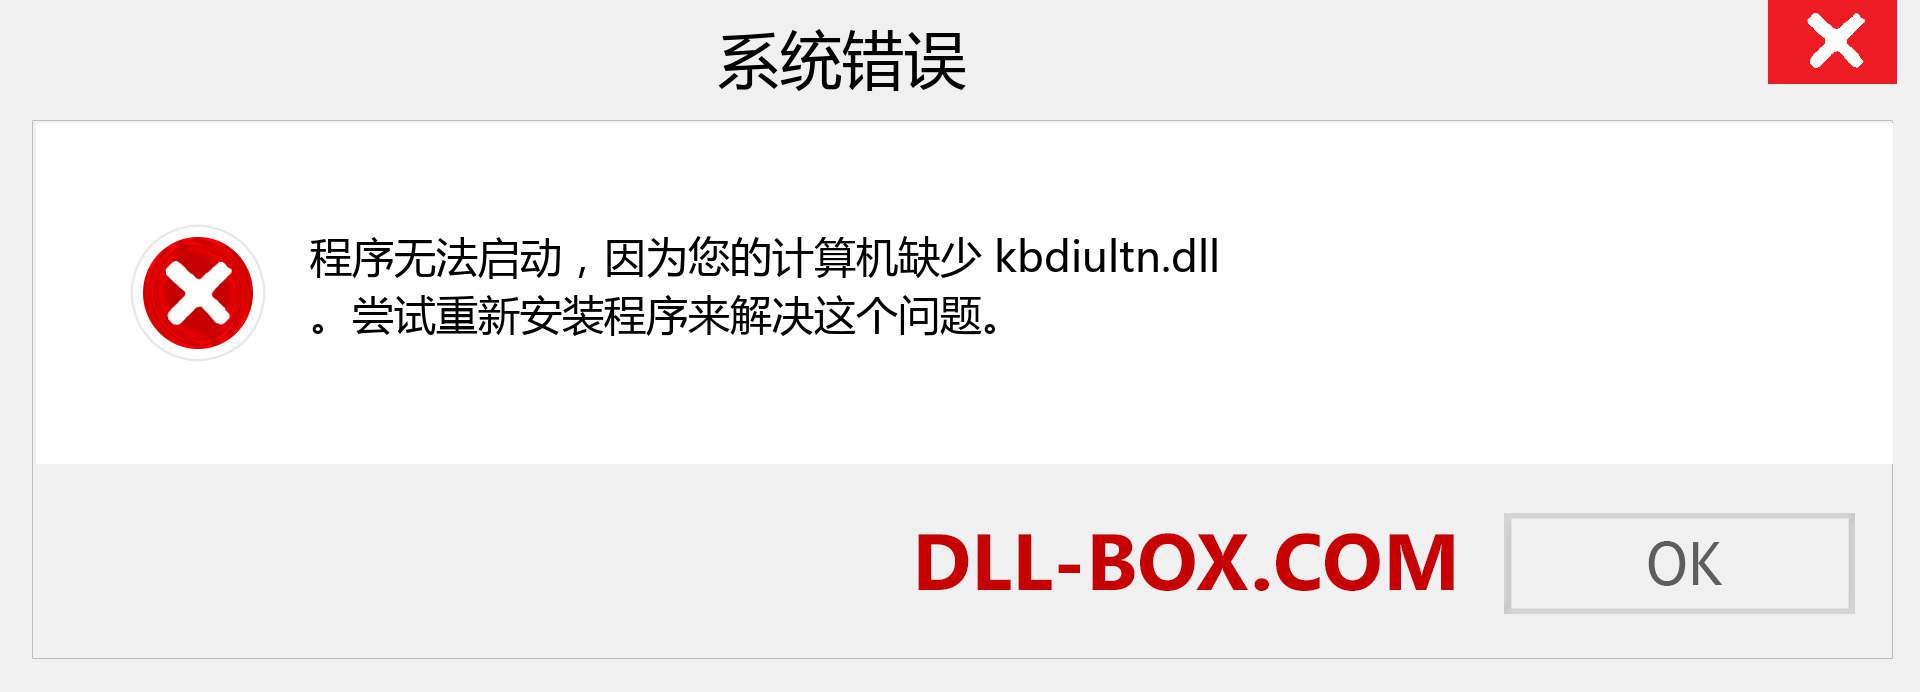 kbdiultn.dll 文件丢失？。 适用于 Windows 7、8、10 的下载 - 修复 Windows、照片、图像上的 kbdiultn dll 丢失错误